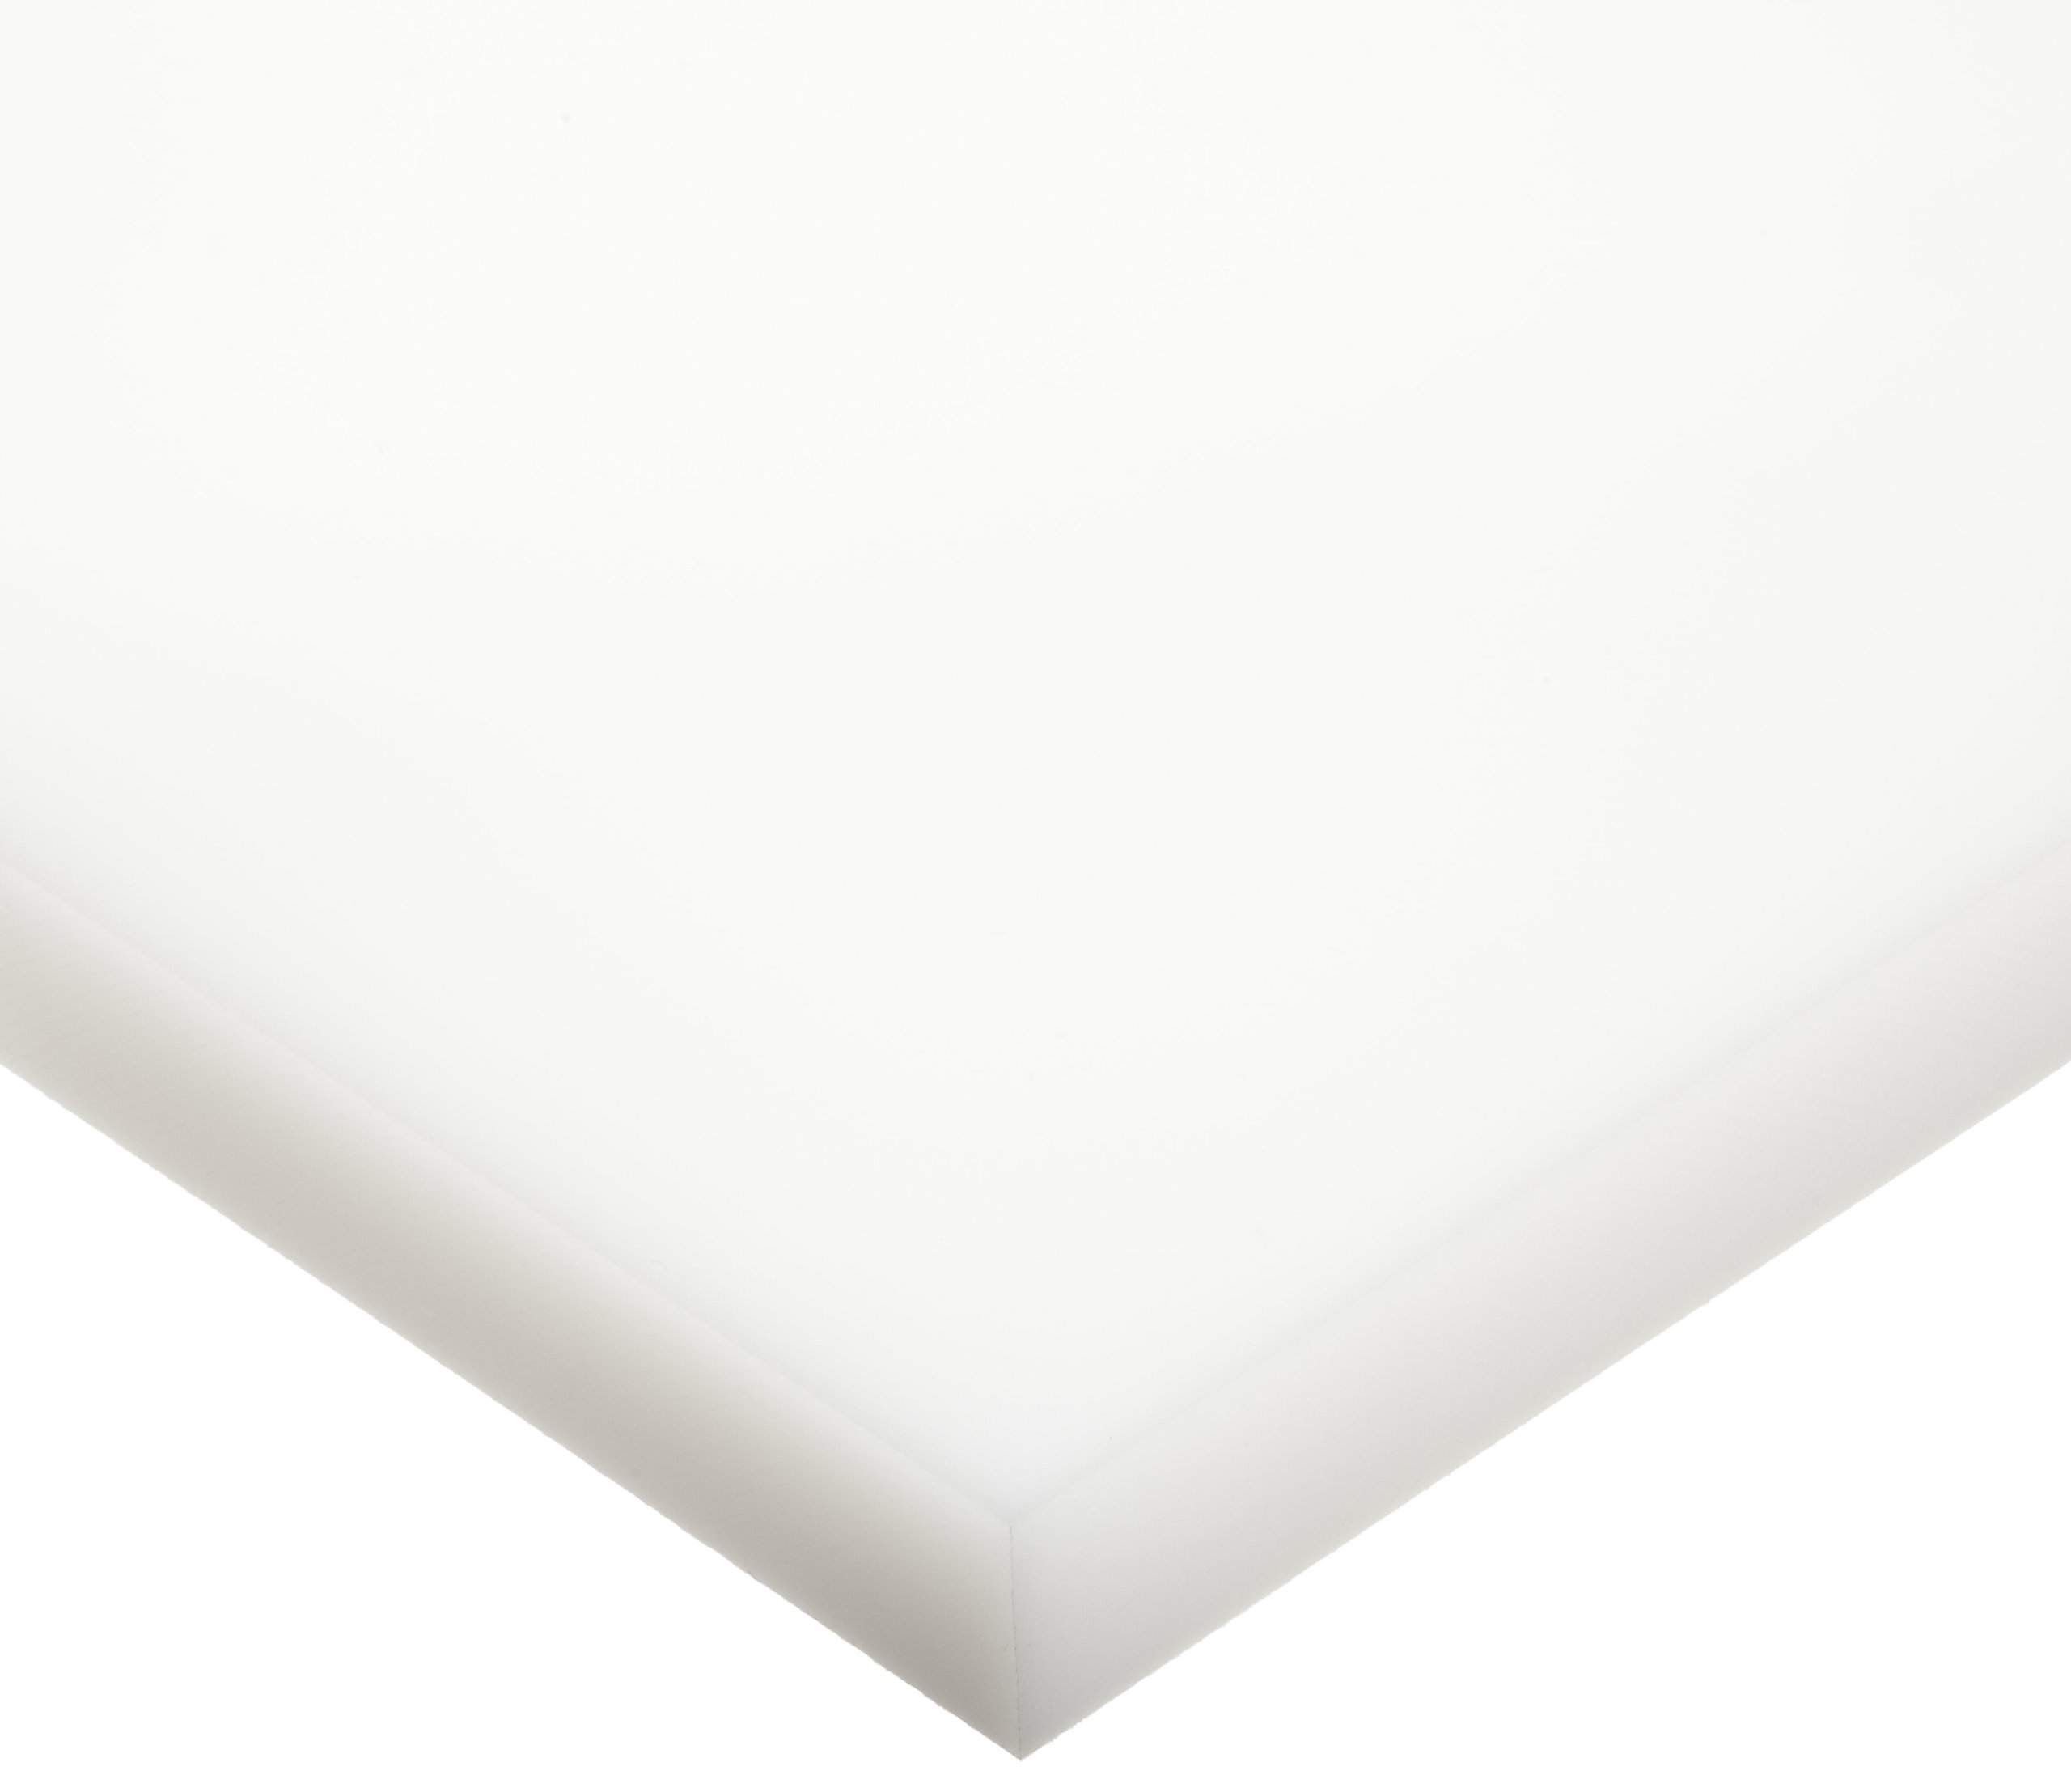 Thick x 12" x 12" Tivar UHMW PE Natural White Sheet .750" 3/4" 